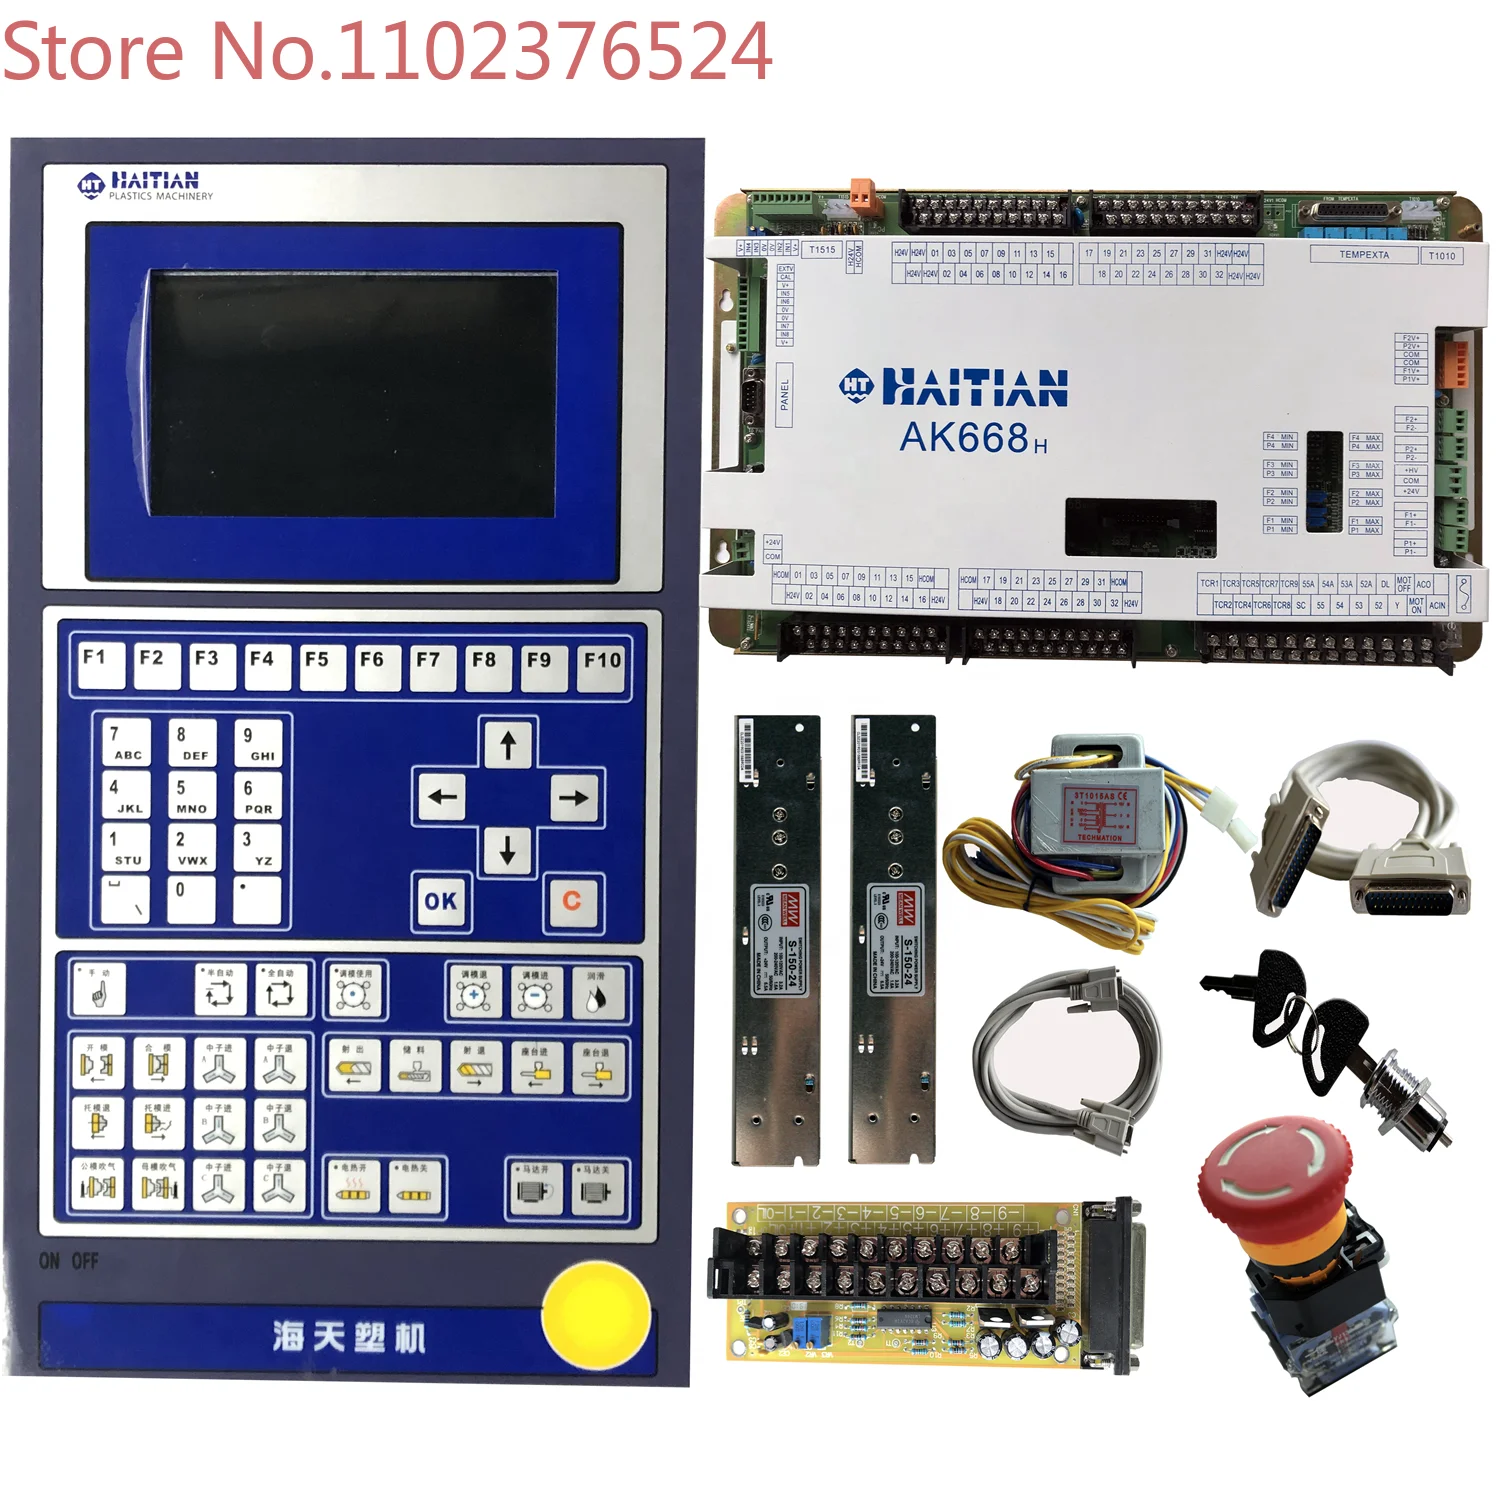 

AK668 control system + HMI- Q7 panel , TECHMATION Brand full set PLC for molding machine